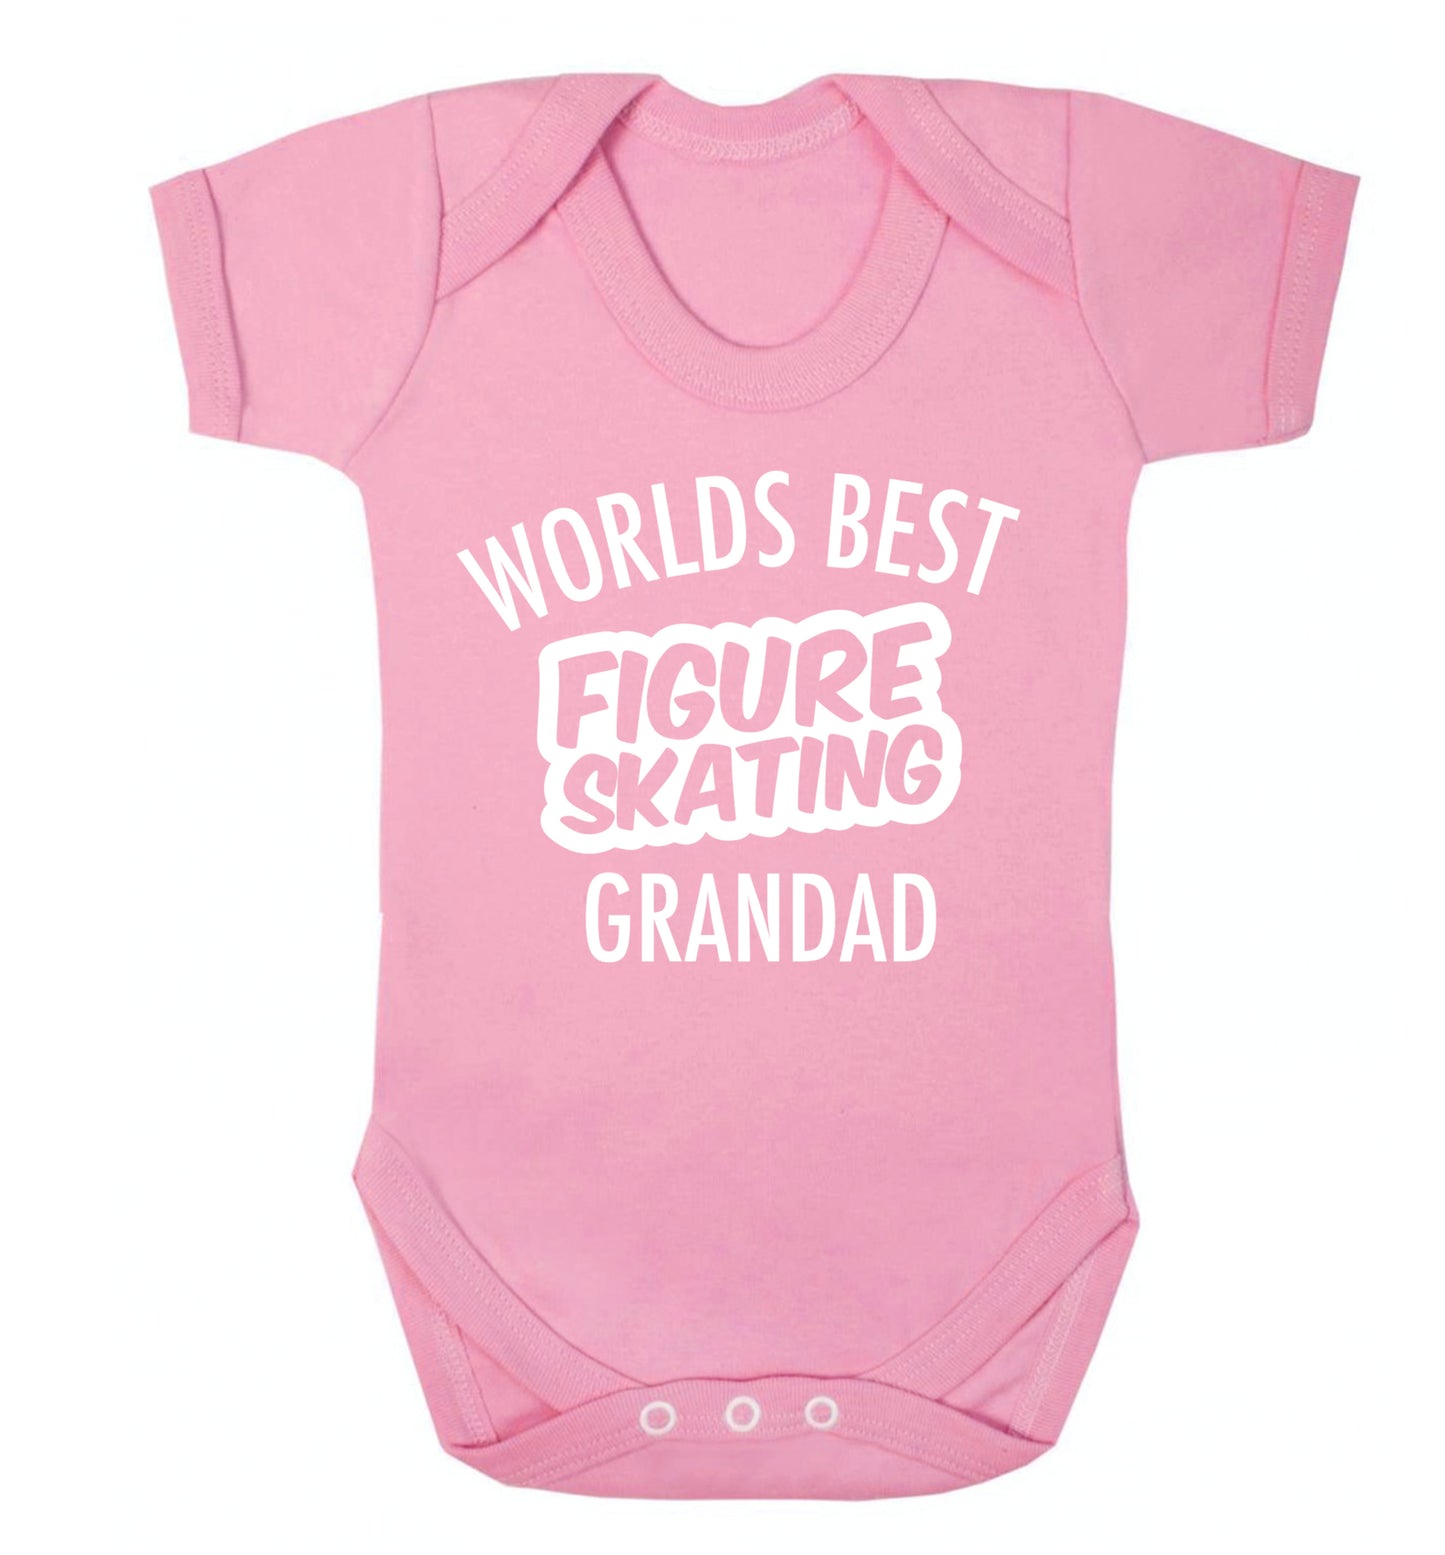 Worlds best figure skating grandad Baby Vest pale pink 18-24 months